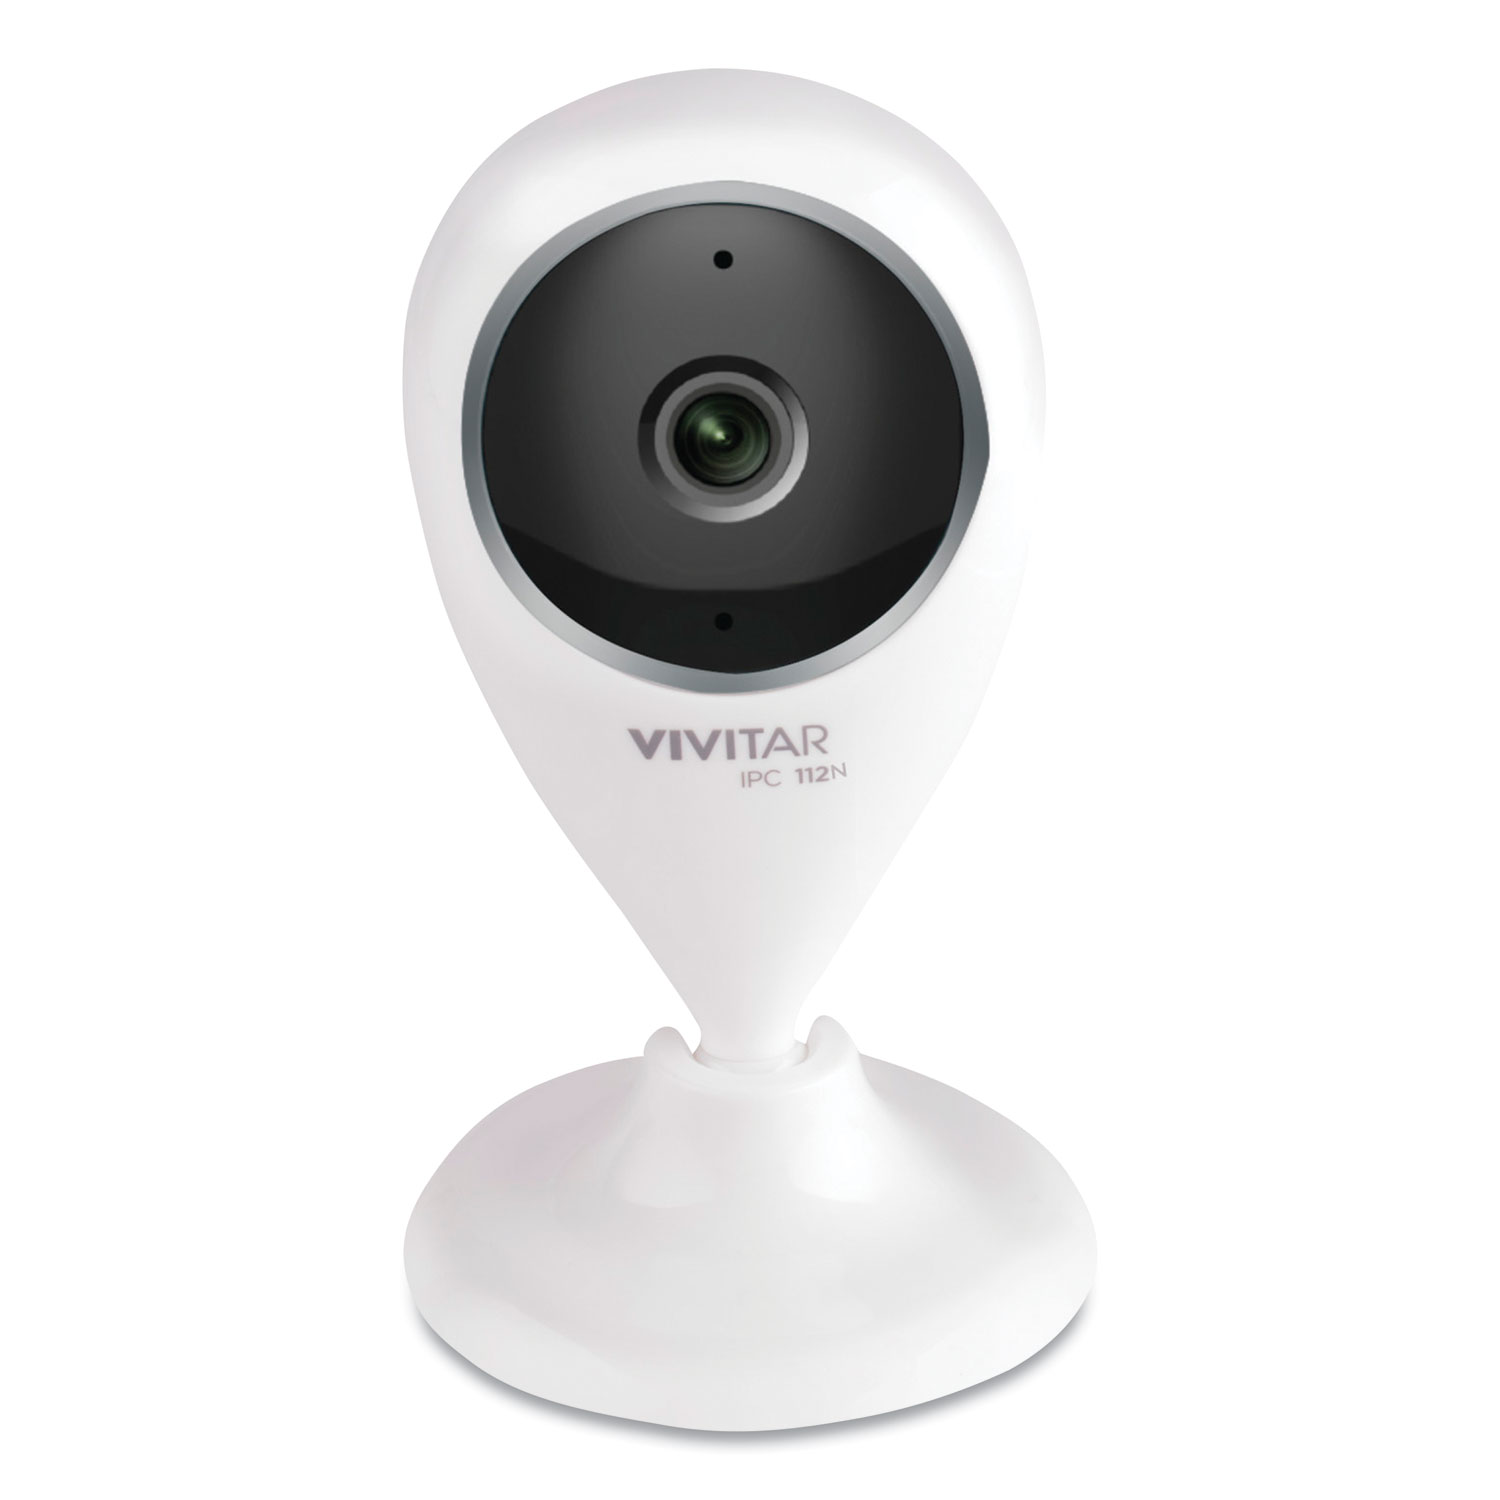  Vivitar IPC112G Smart Security Wi-Fi Cam, 720p (VVT2796265) 